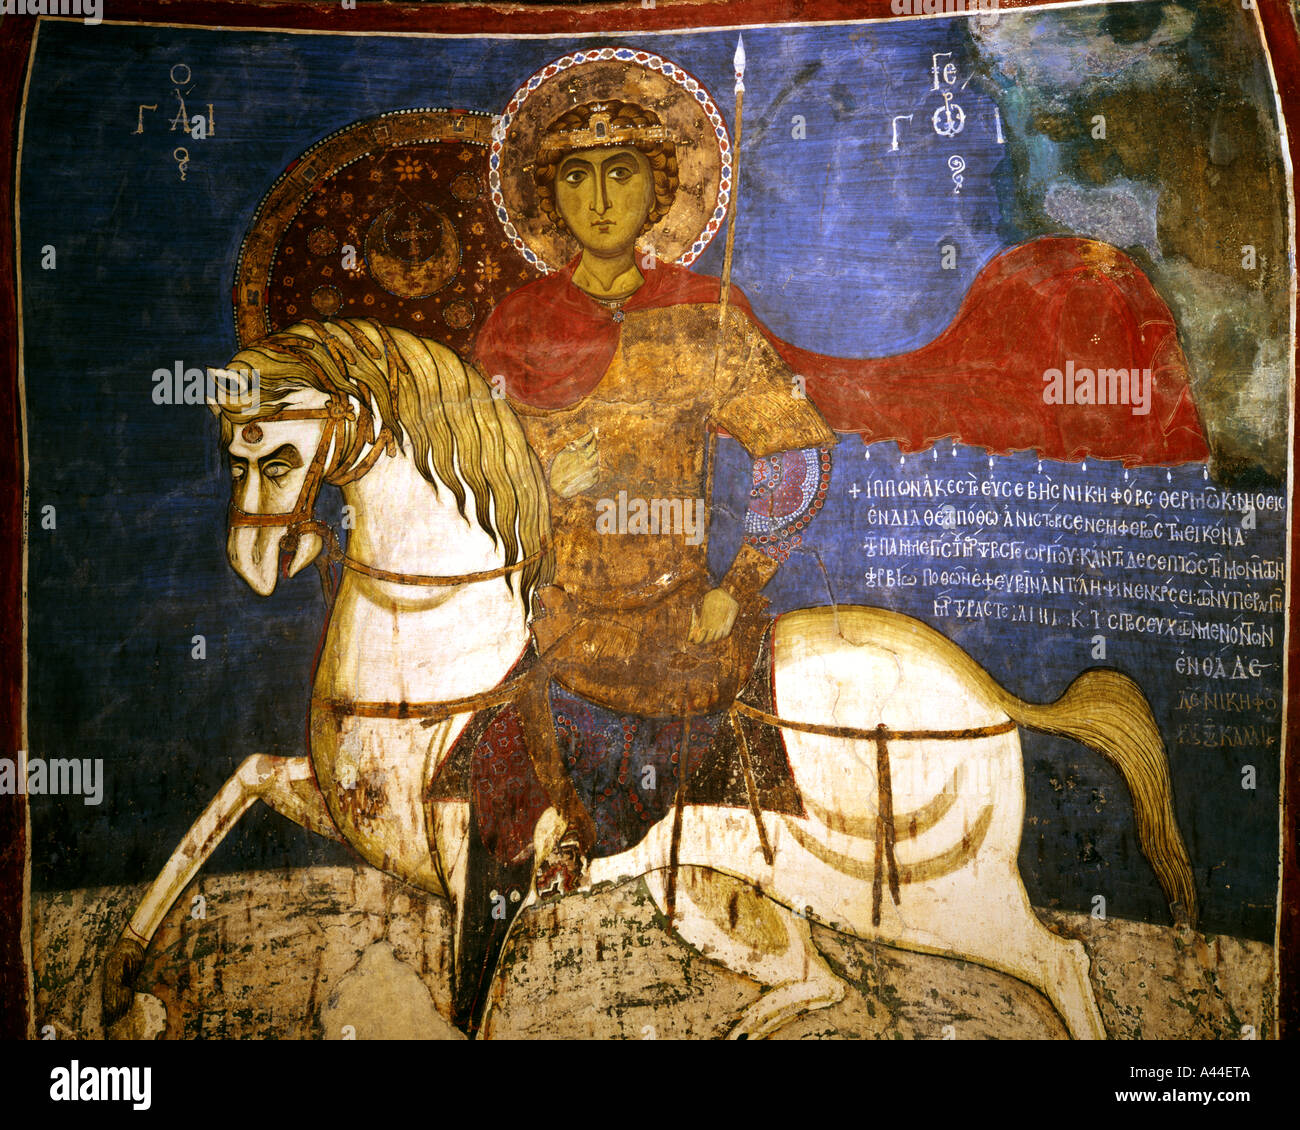 CY - ASSINOU: Byzantinische Fresken in der Assinou Kirche Stockfoto